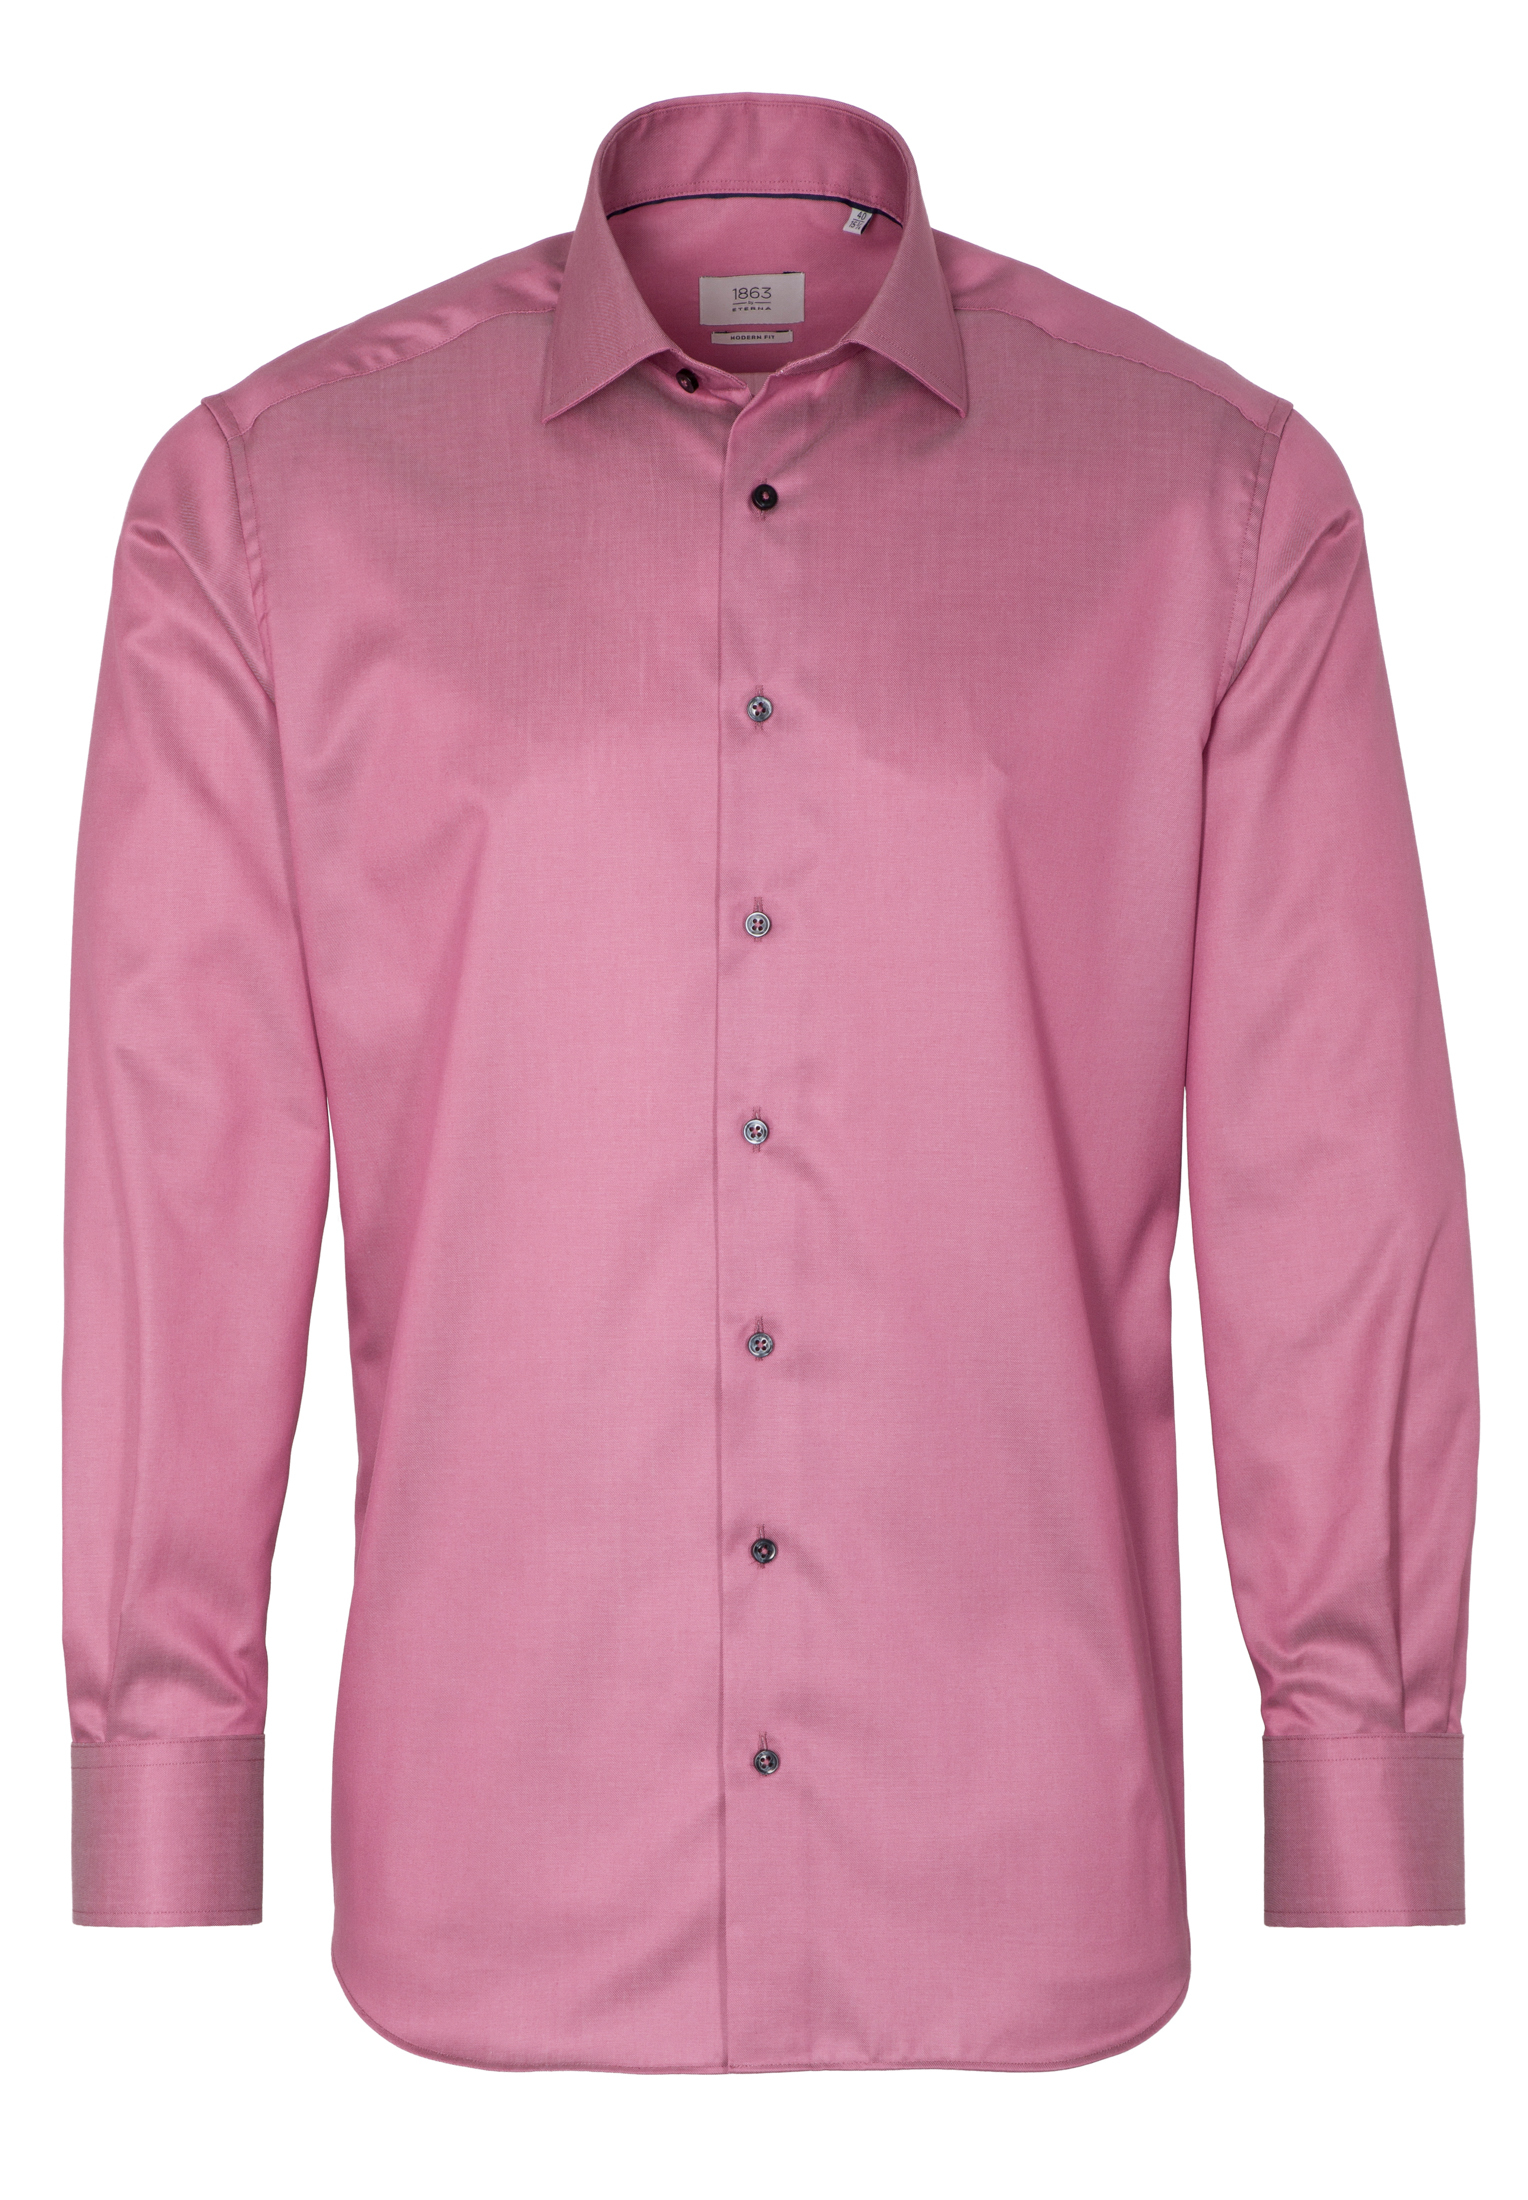 MODERN FIT Luxury Shirt in pink plain